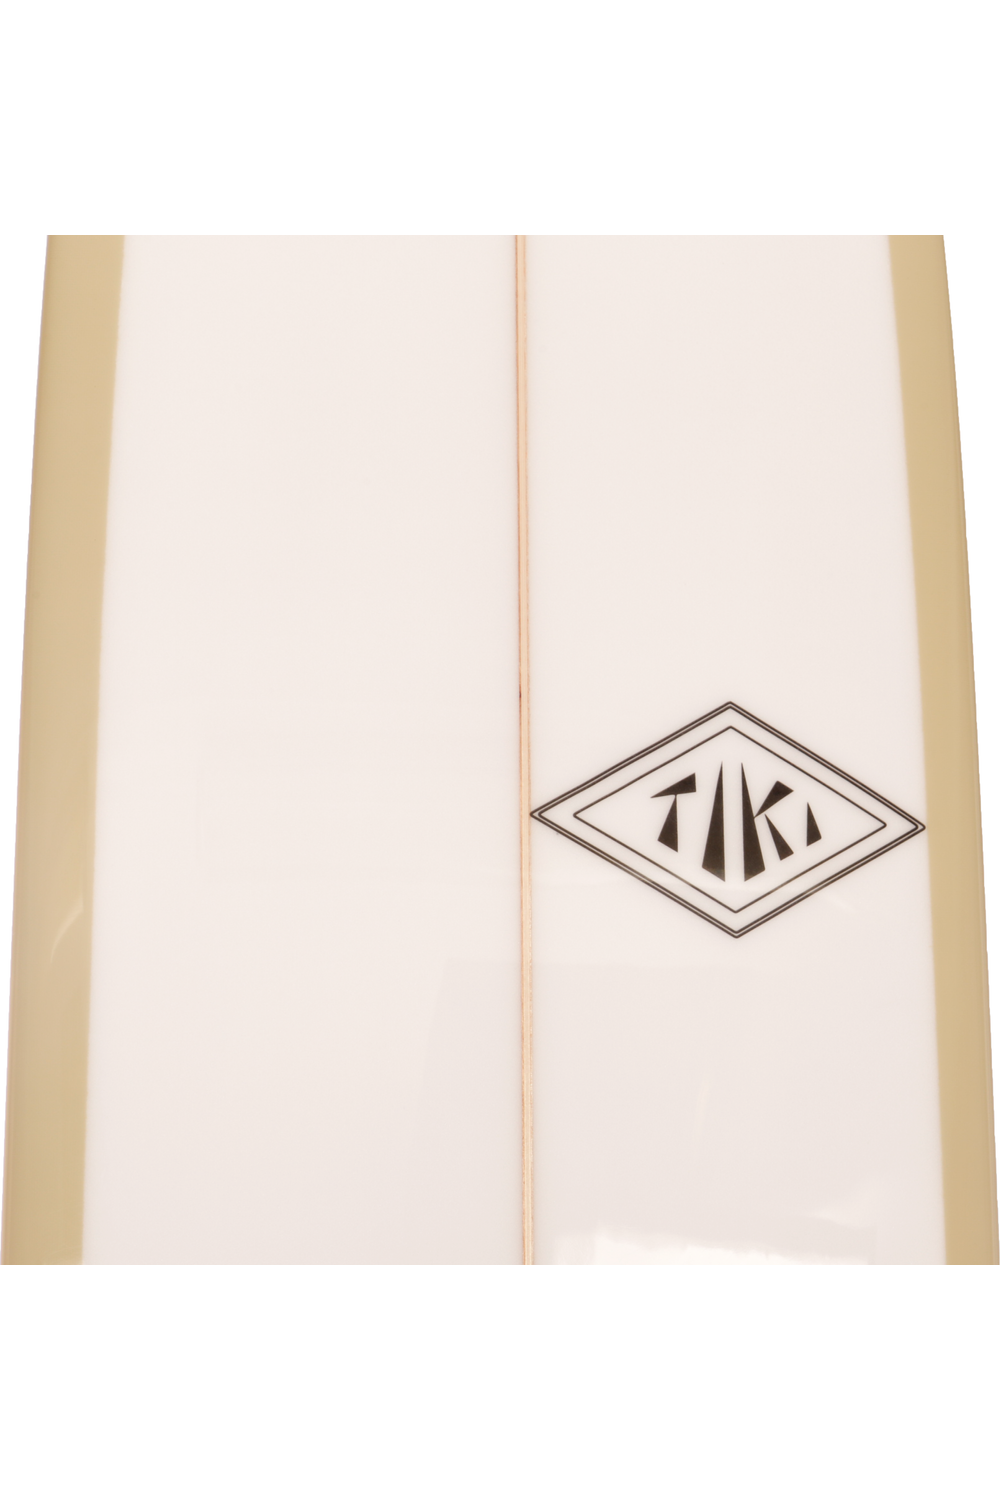 Tiki Custom Surfboard - 9'6 Totem Mal - Marshmallow & White